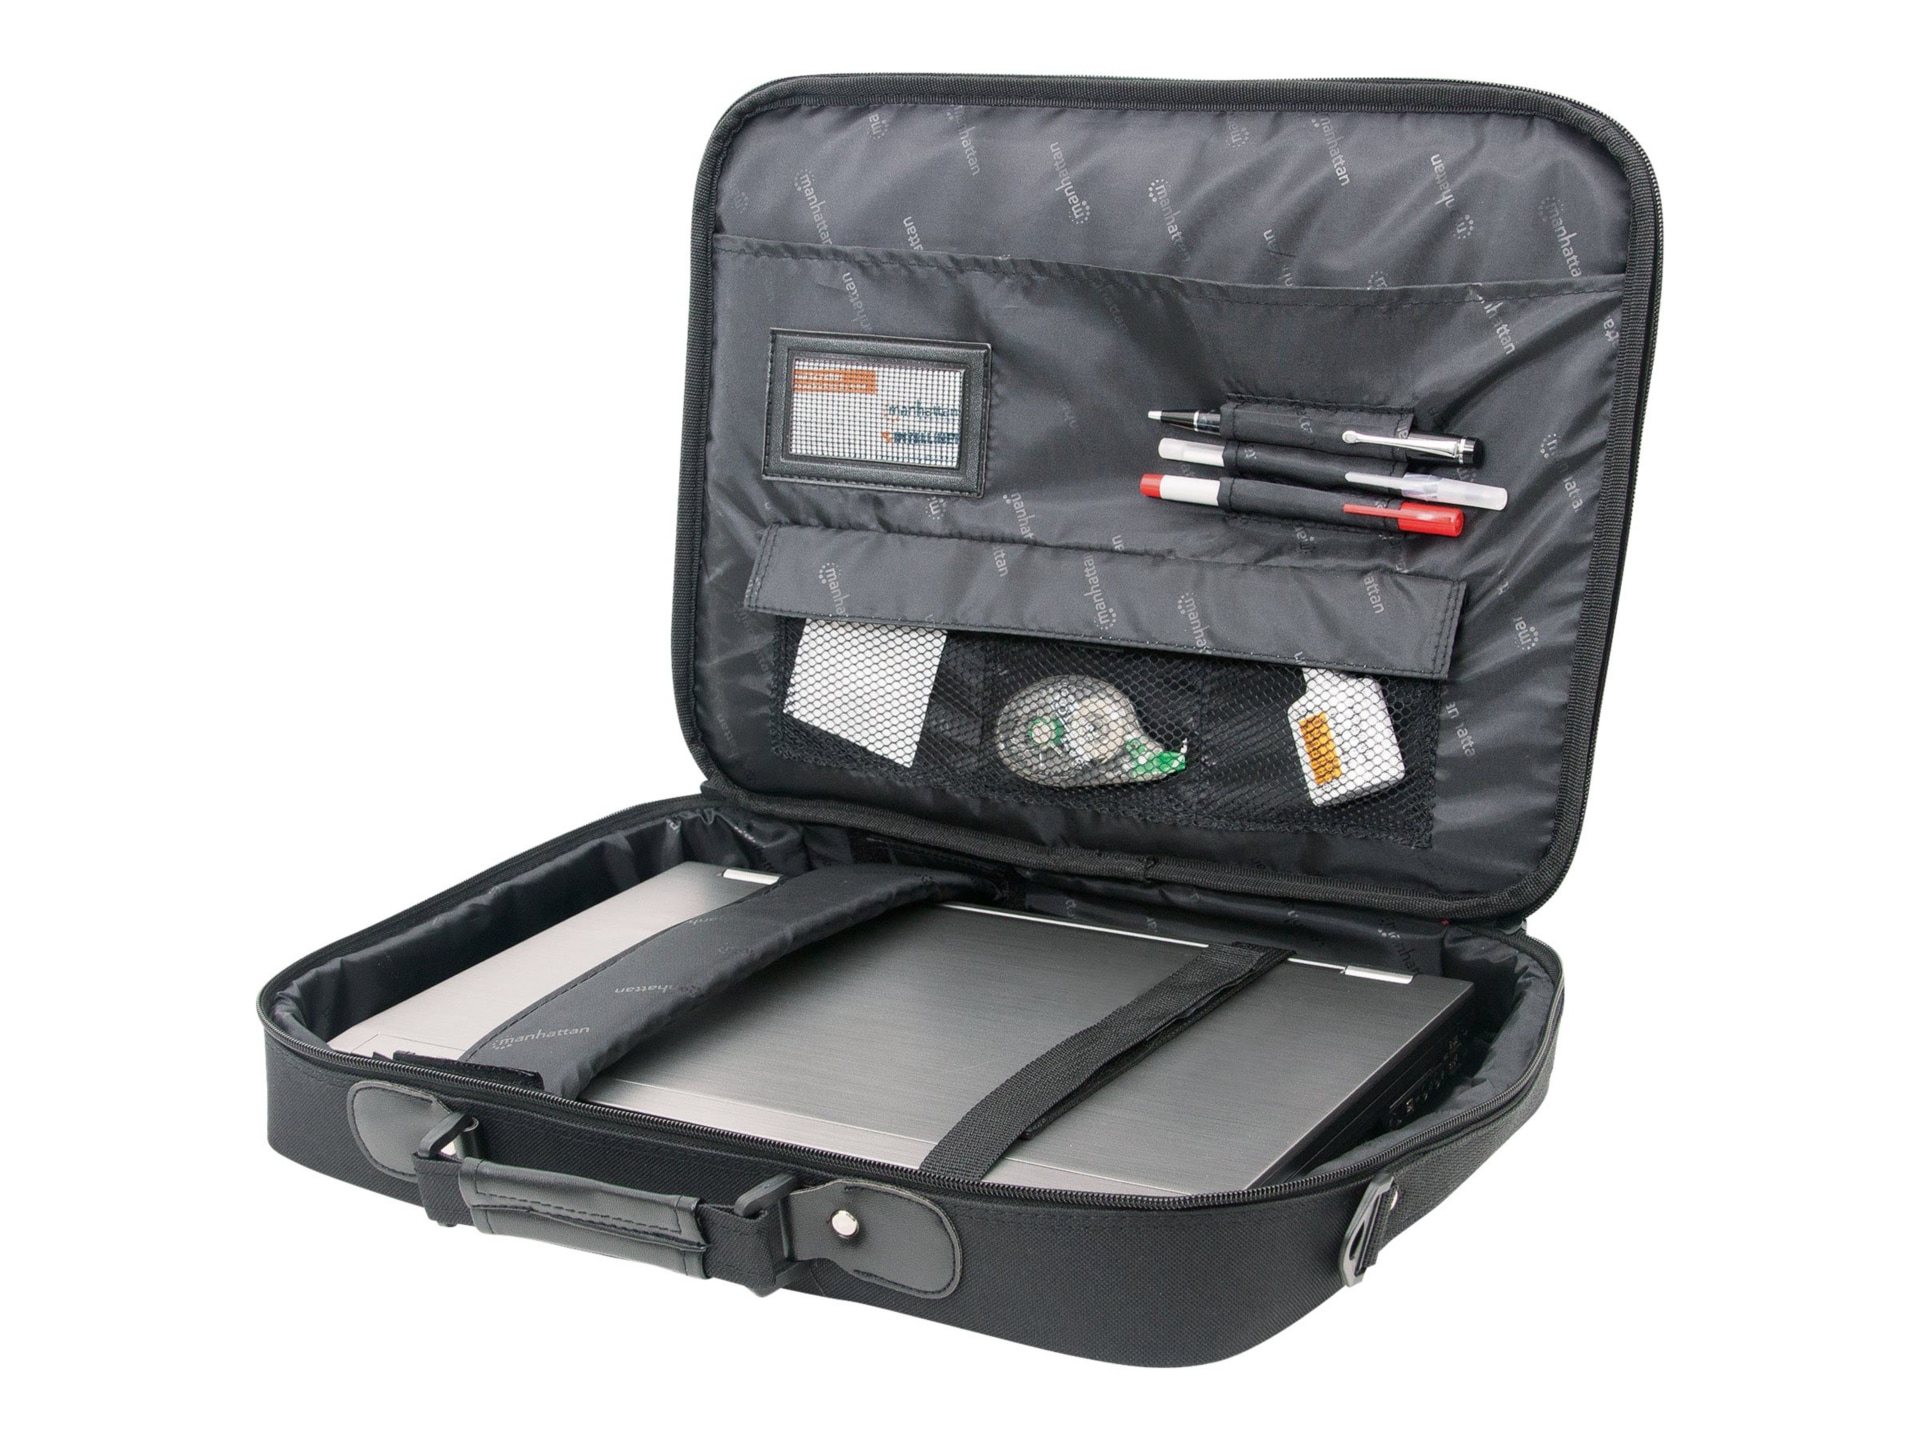 Manhattan Empire Laptop Bag 17.3", Clamshell design, Accessories Pocket, Shoulder Strap (removable), Notebook Case,